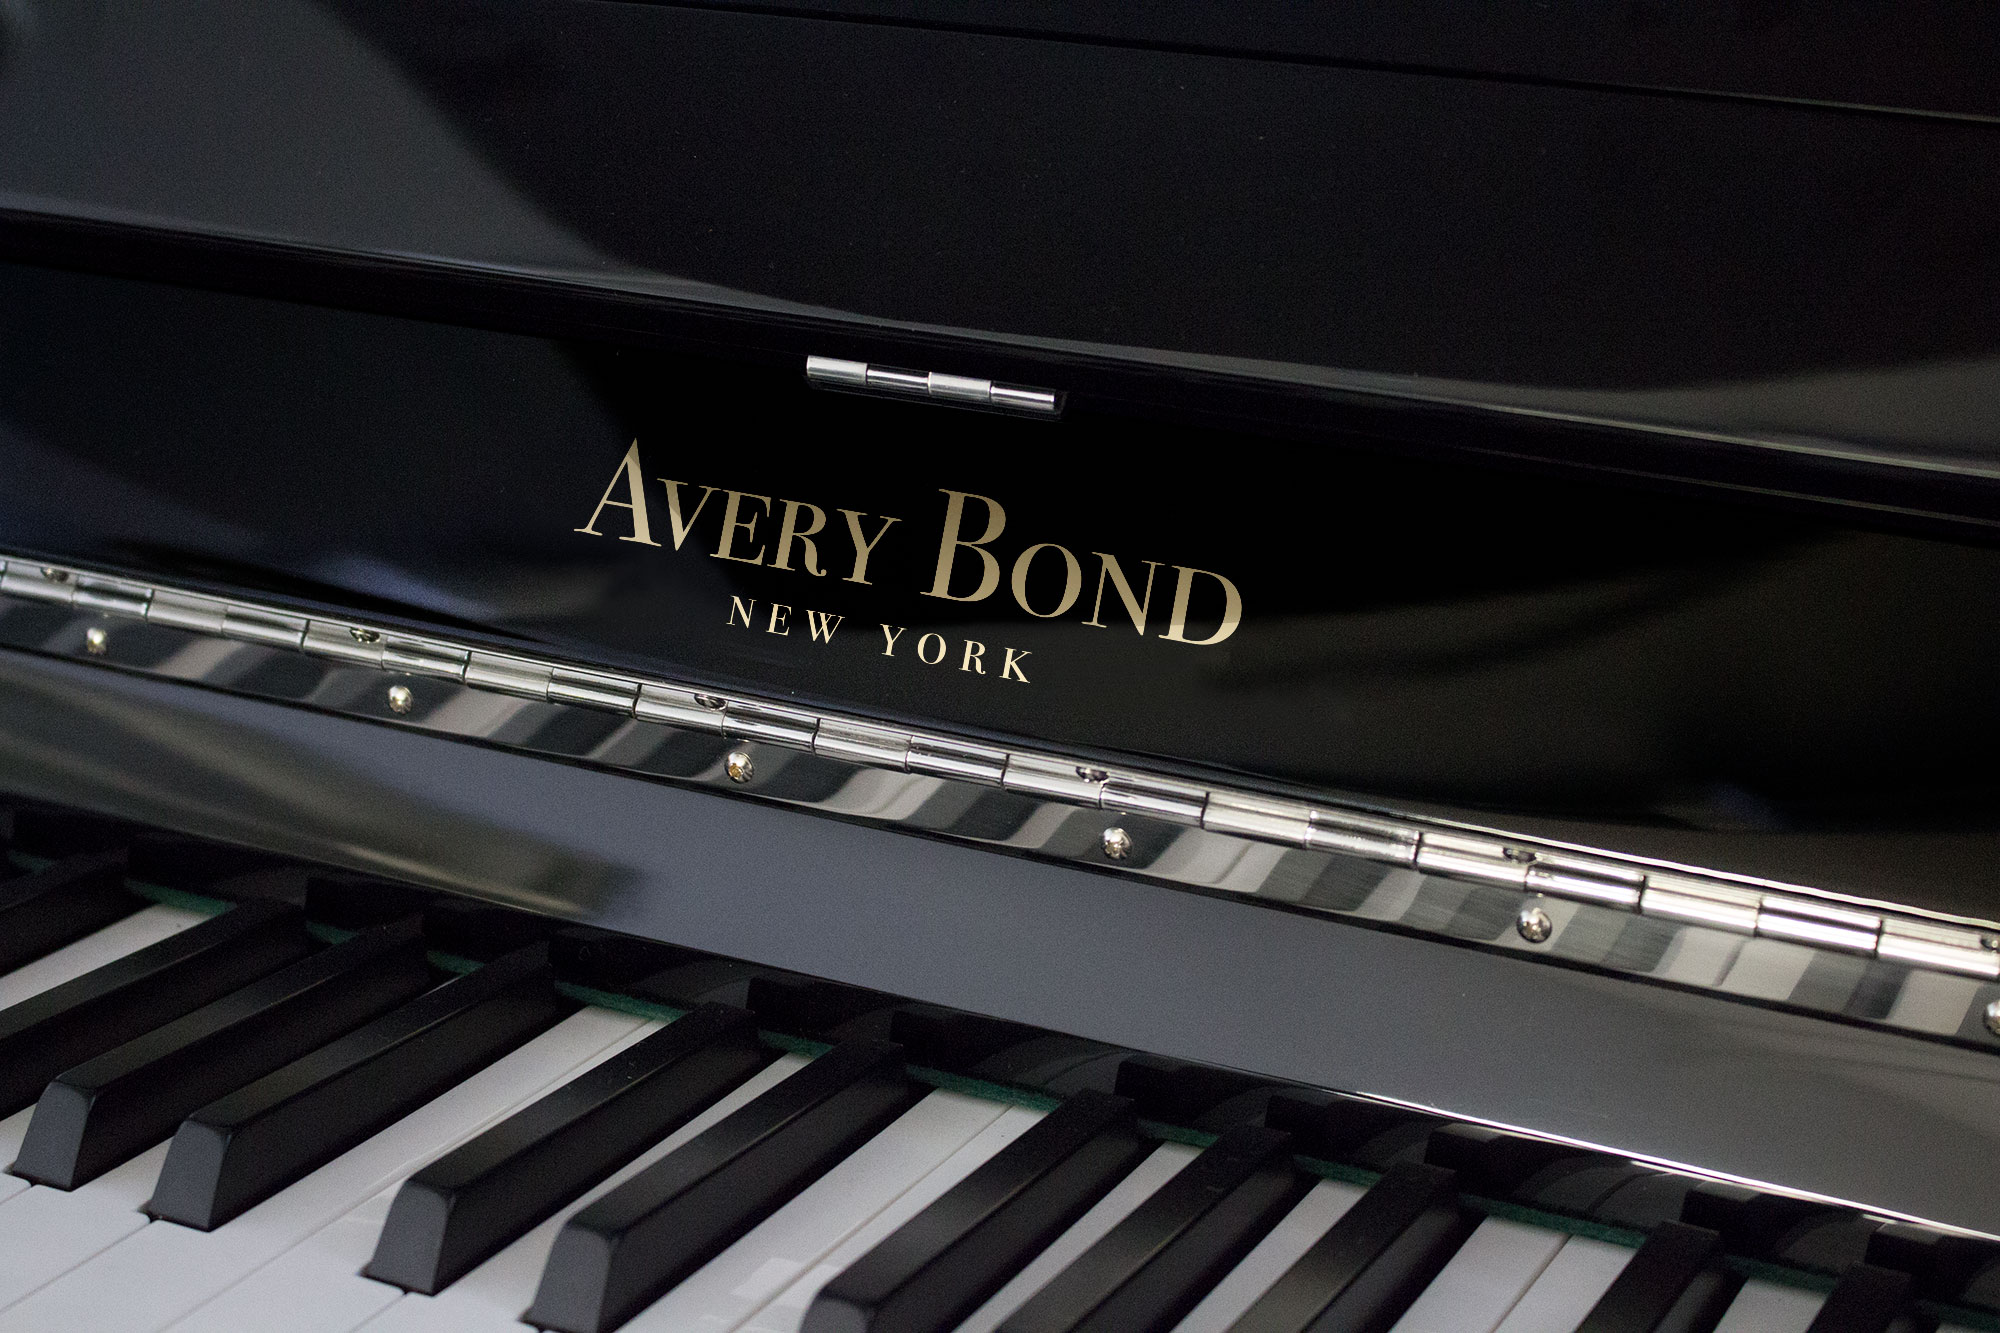 pondSoup - Brand Identity Design - Avery Bond Pianos